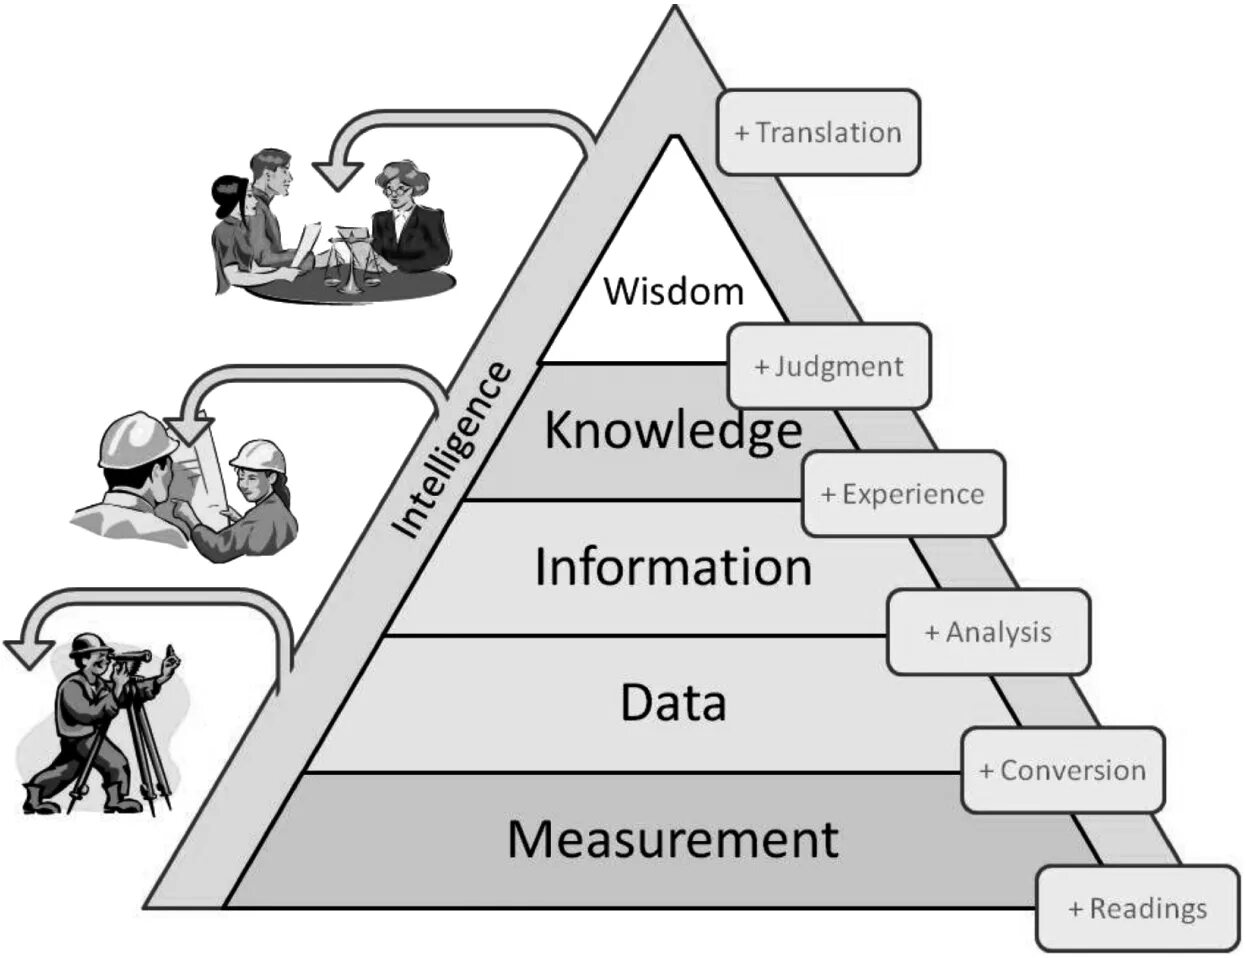 Wisdom перевод на русский. Пирамида DIKW. DIKW модель. Структура управления знаниями DIKW. Knowledge Management.